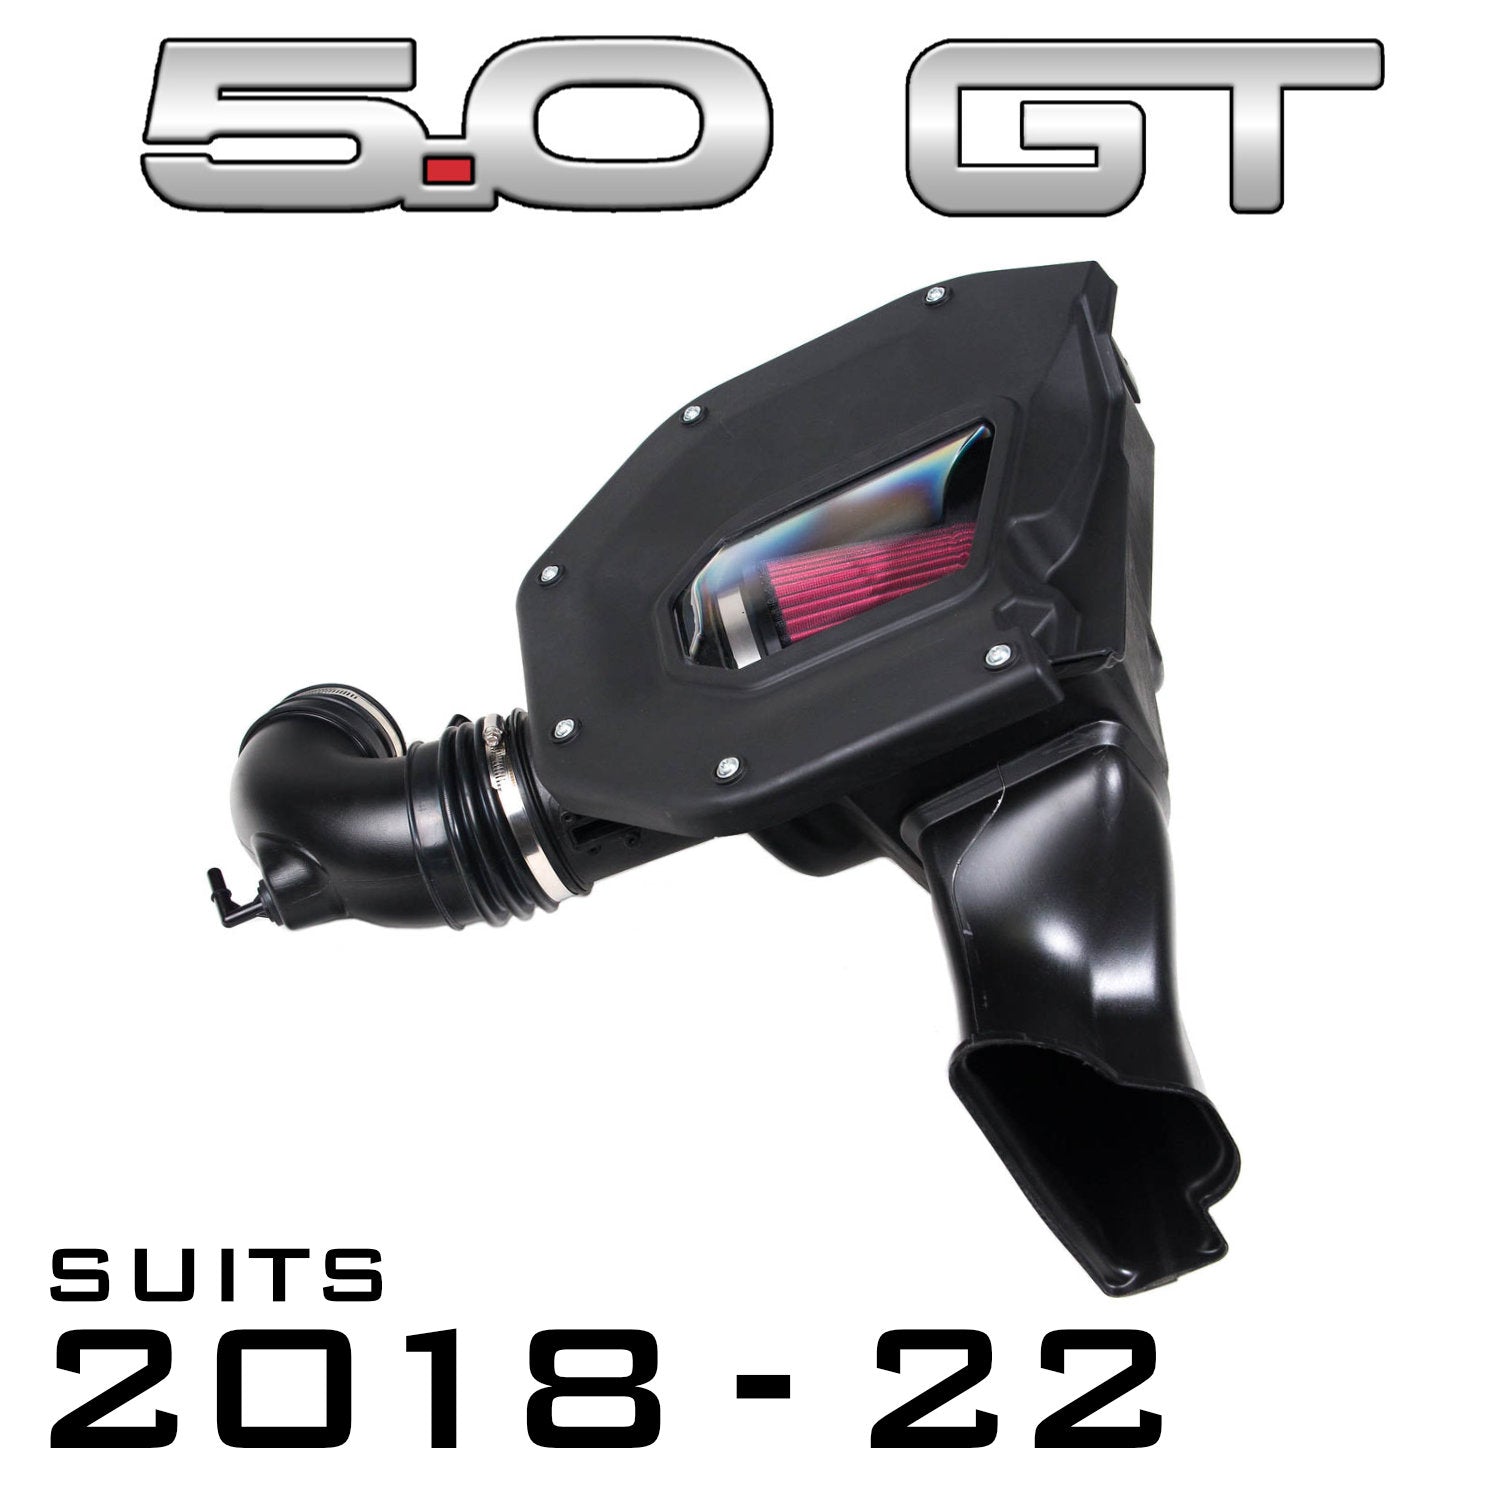 ROUSH 2018-23 5.0L V8 Cold Air Intake